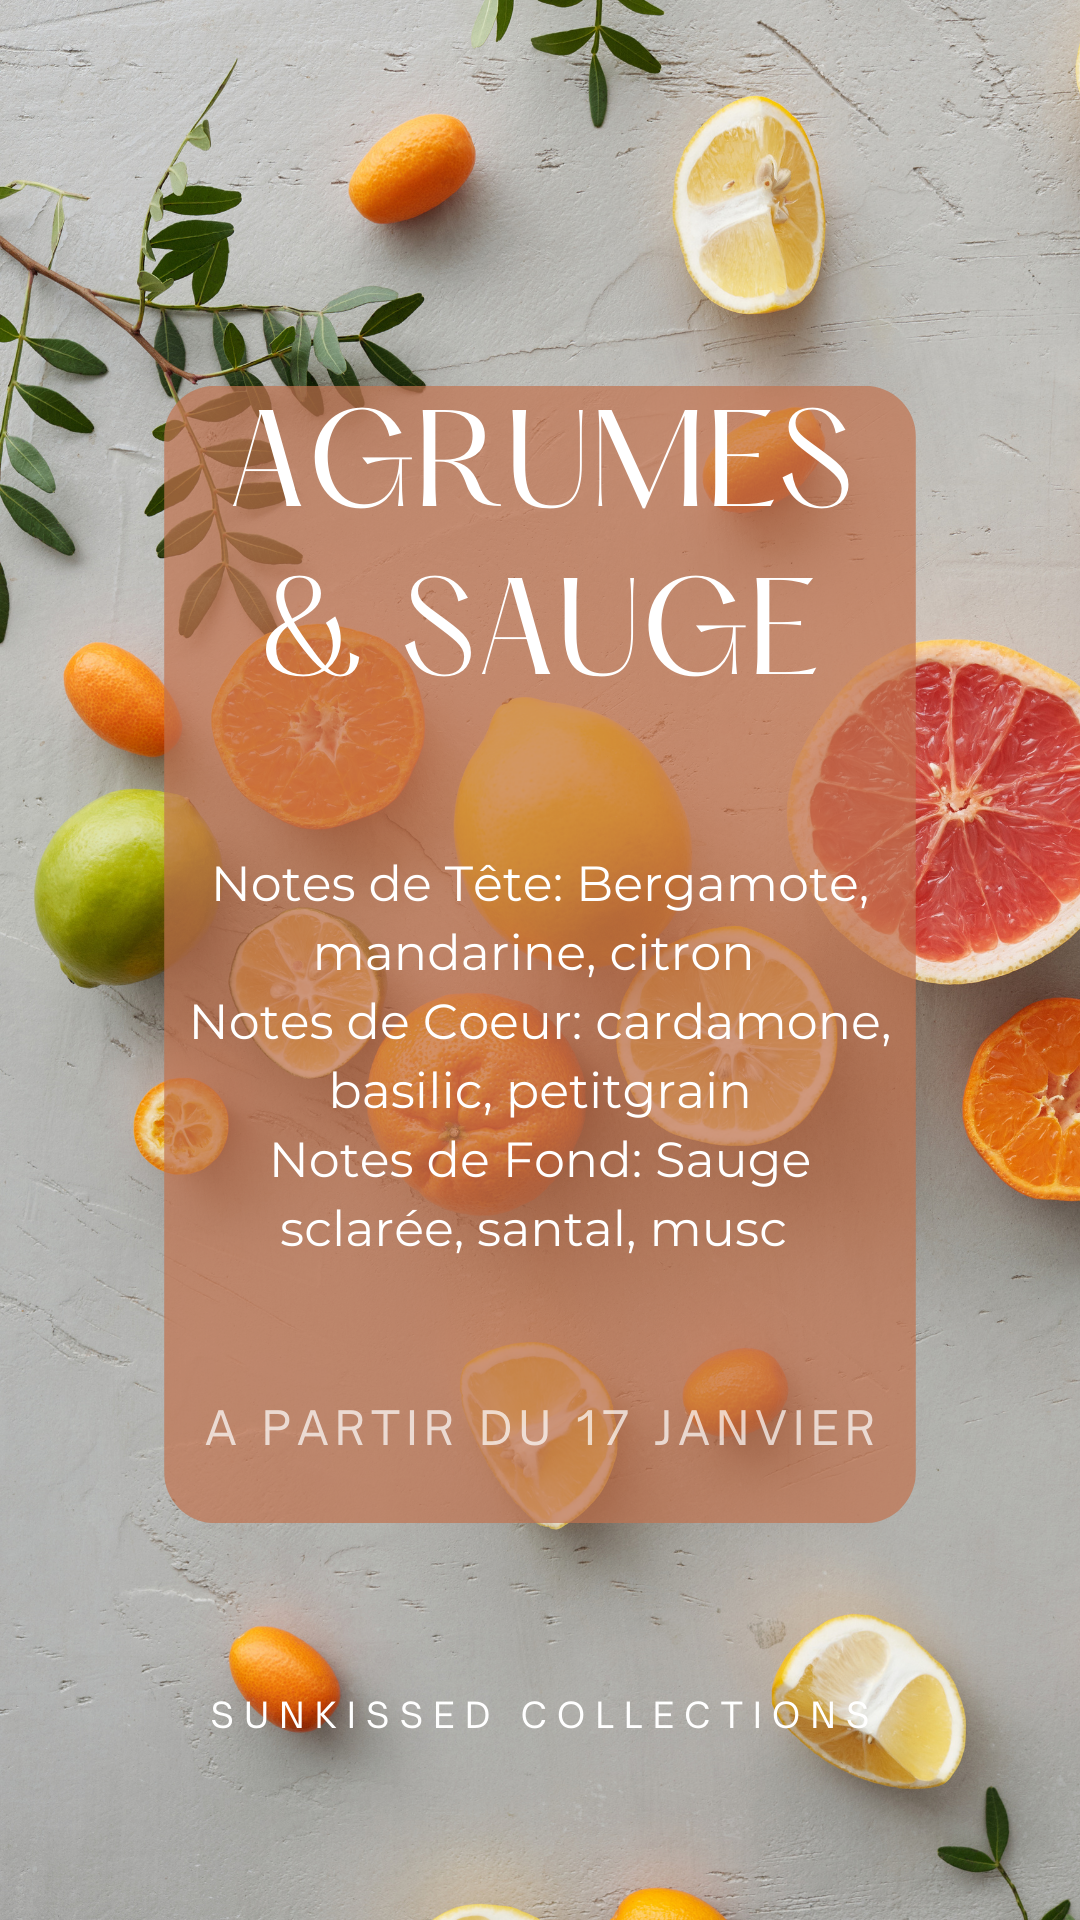 Fondant Parfumé - Agrumes & Sauge